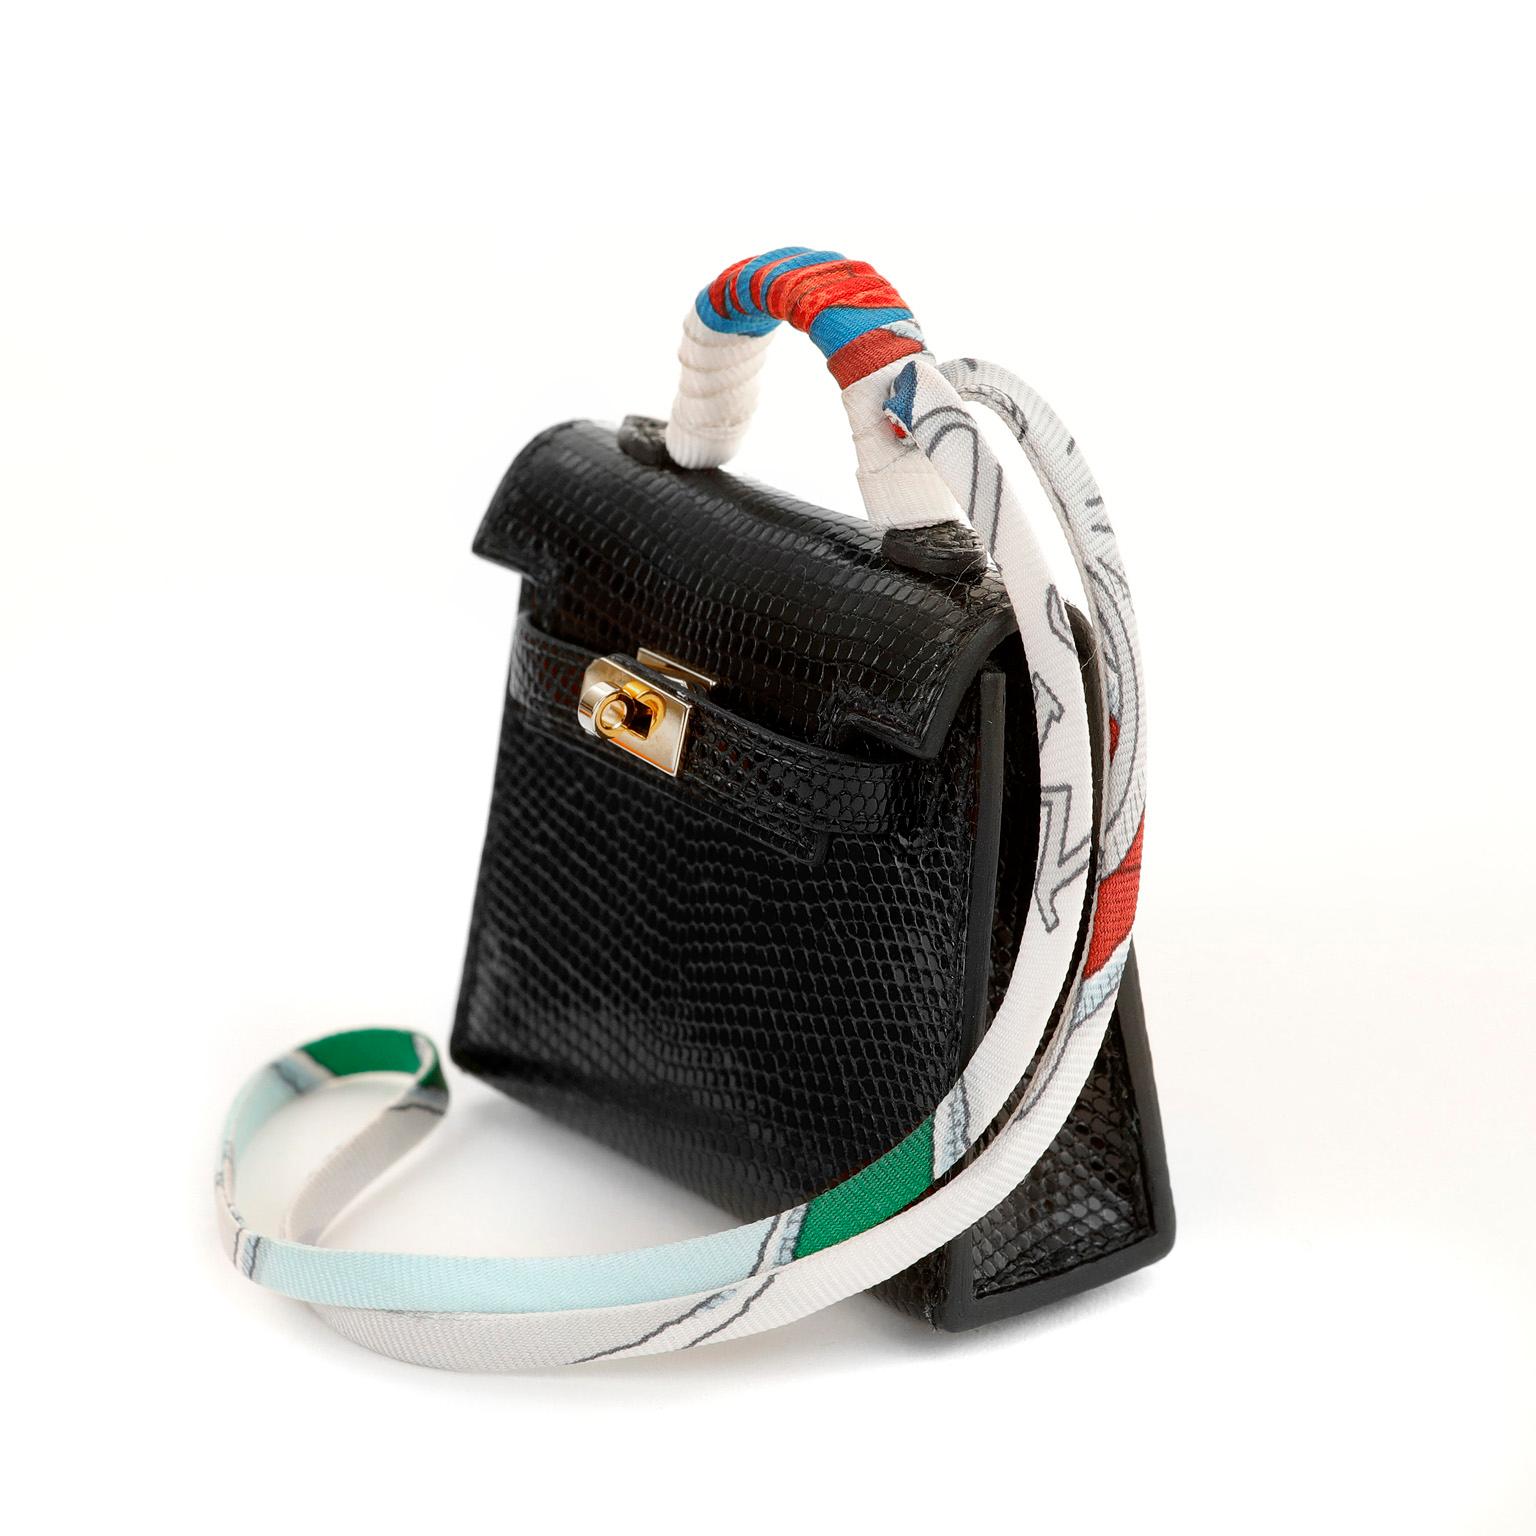 Hermès Black Lizard Micro Kelly Bag Charm with Twilly For Sale 2